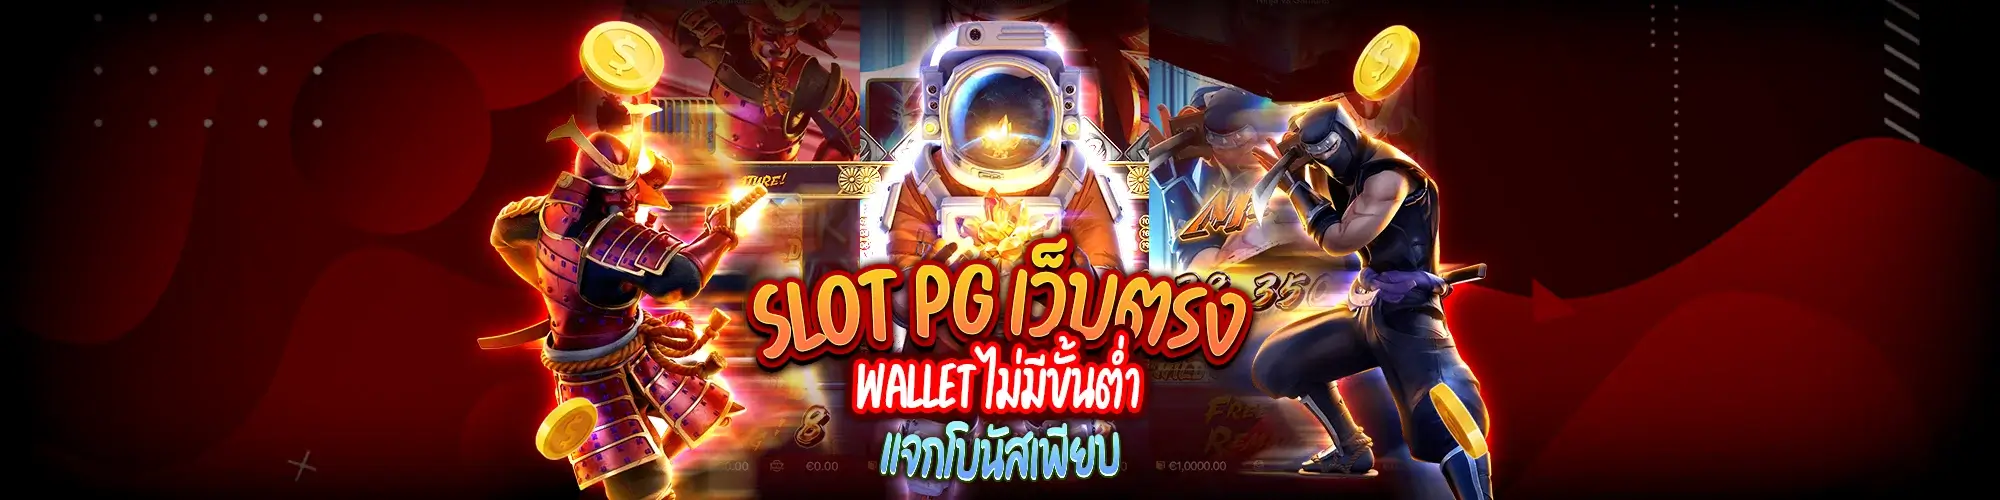 Slot pg เว็บตรง wallet ไม่มีขั้นต่ำ